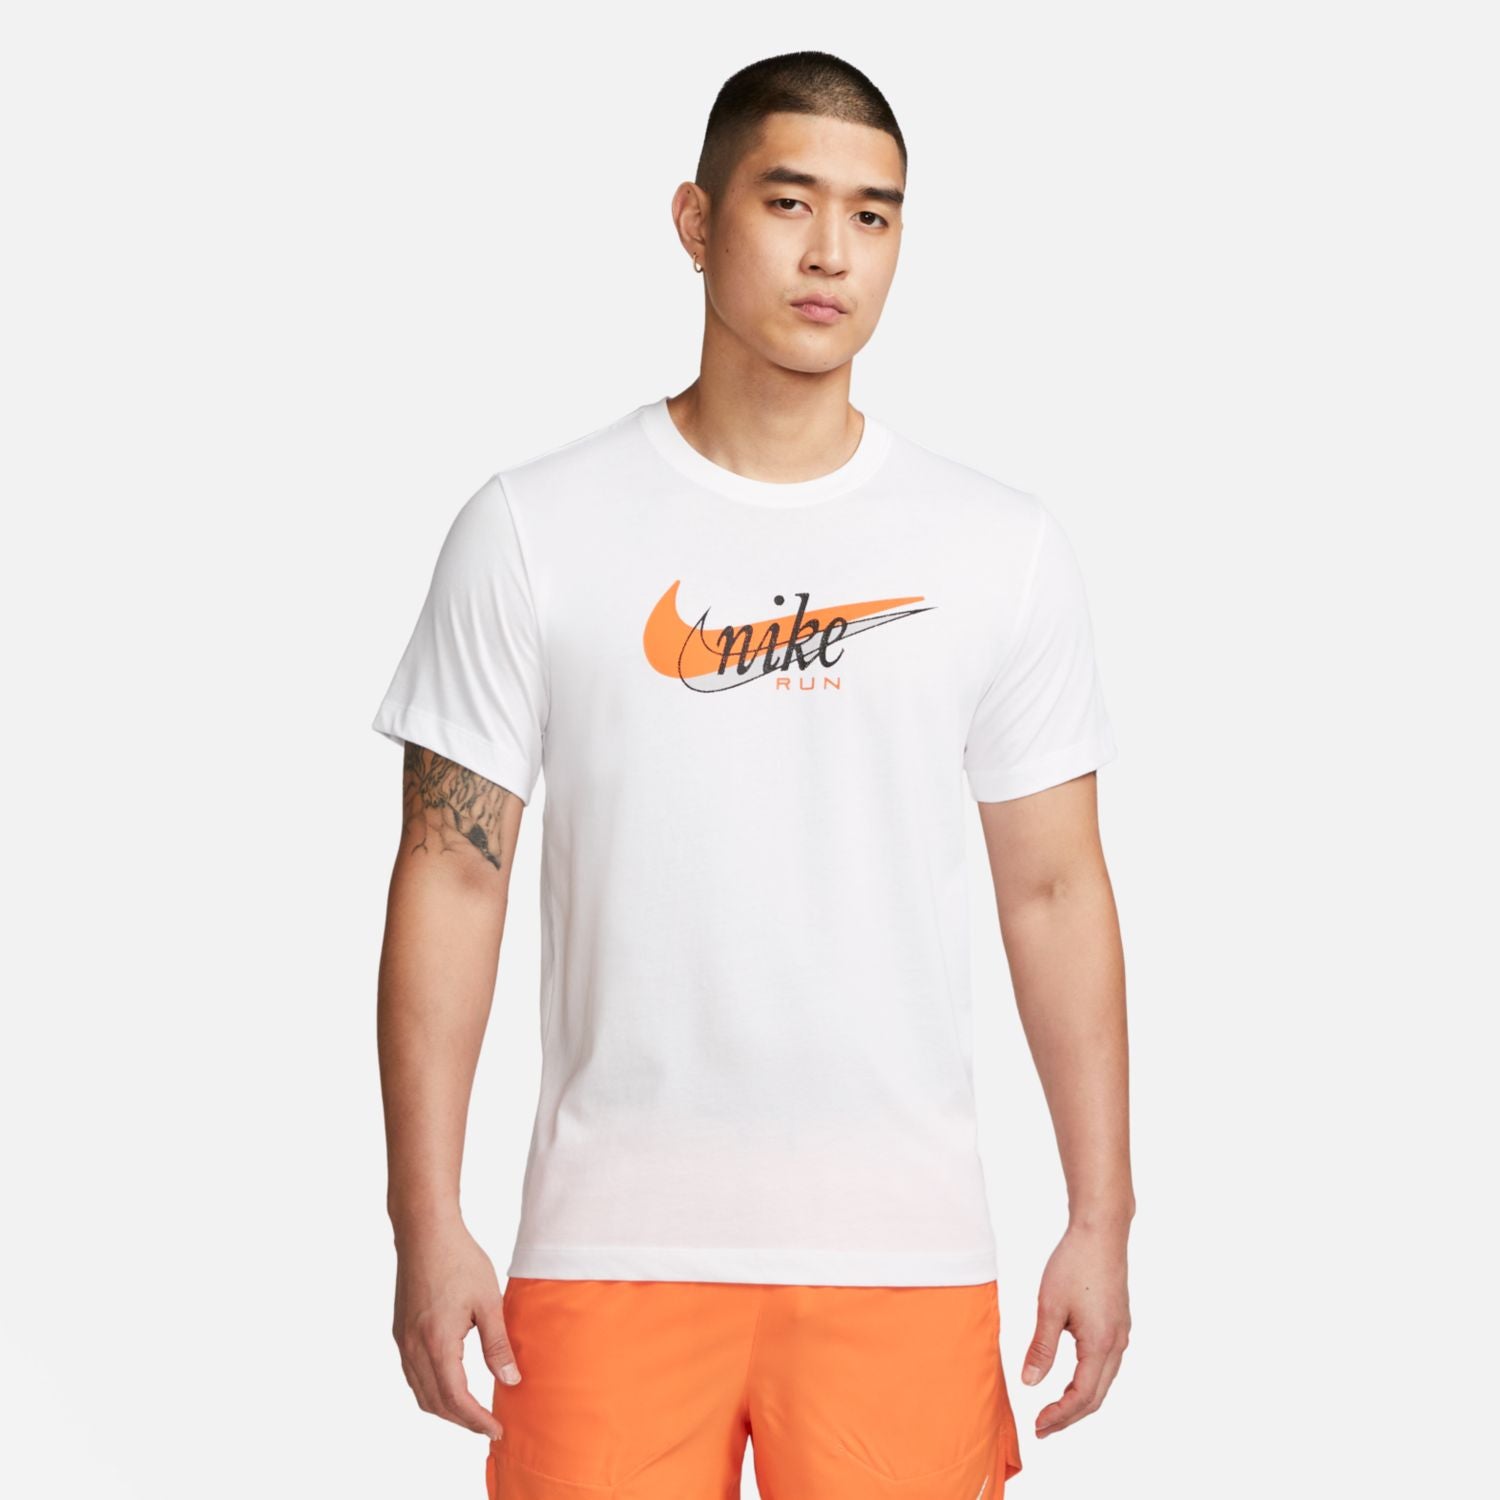 Men's T-Shirts & Tops | Sonee Sports